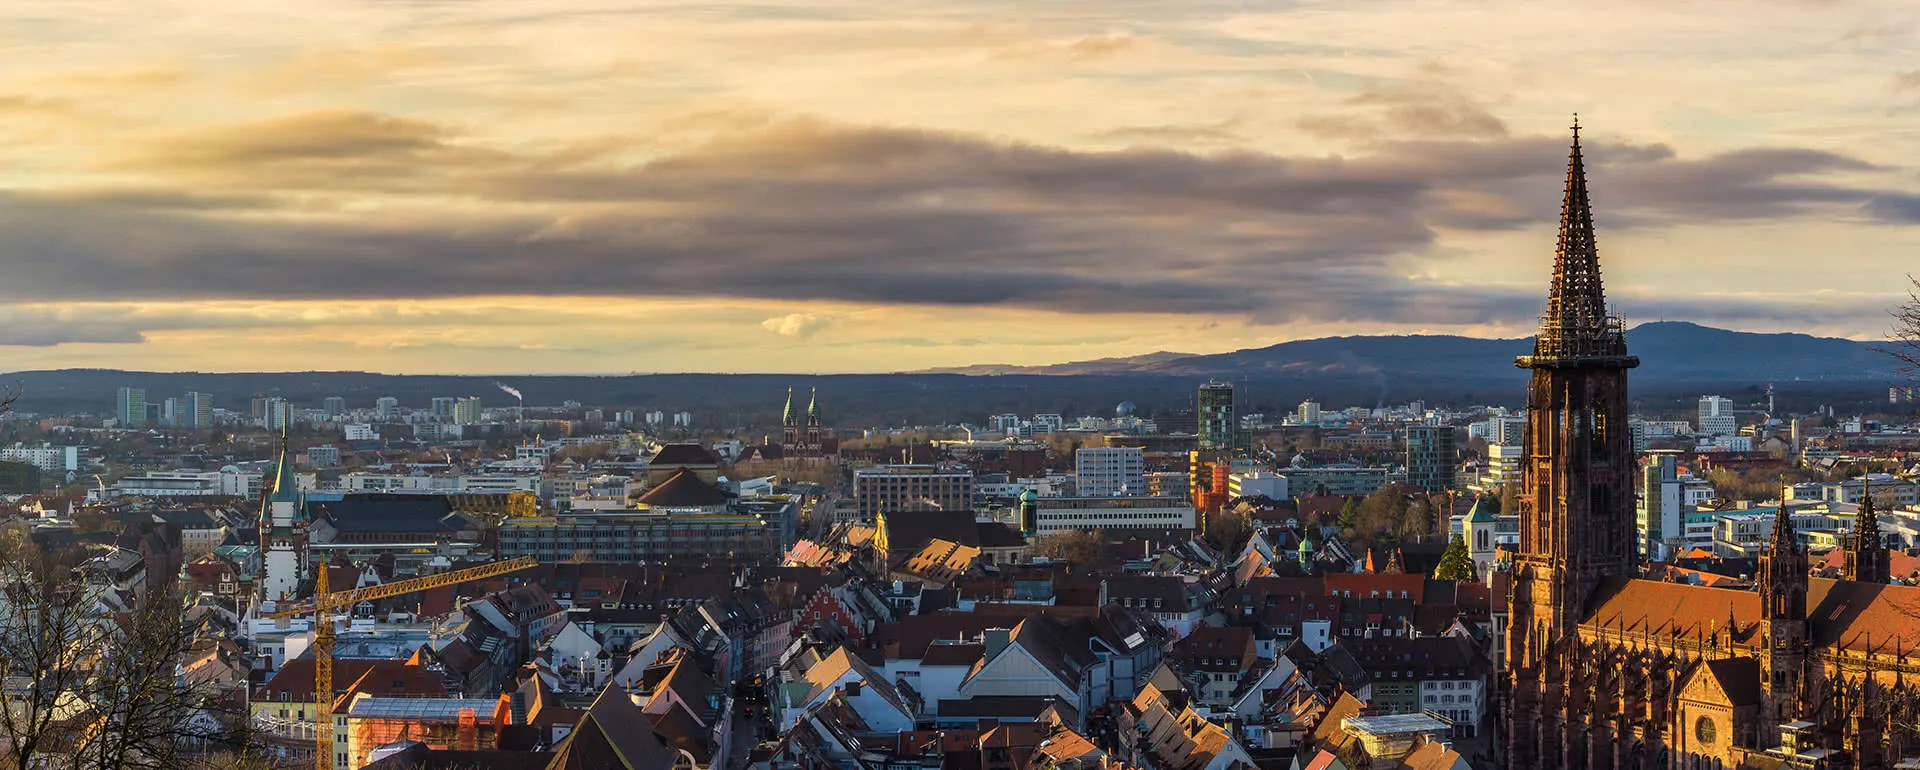 Freiburg im Breisgau Panorama Bild